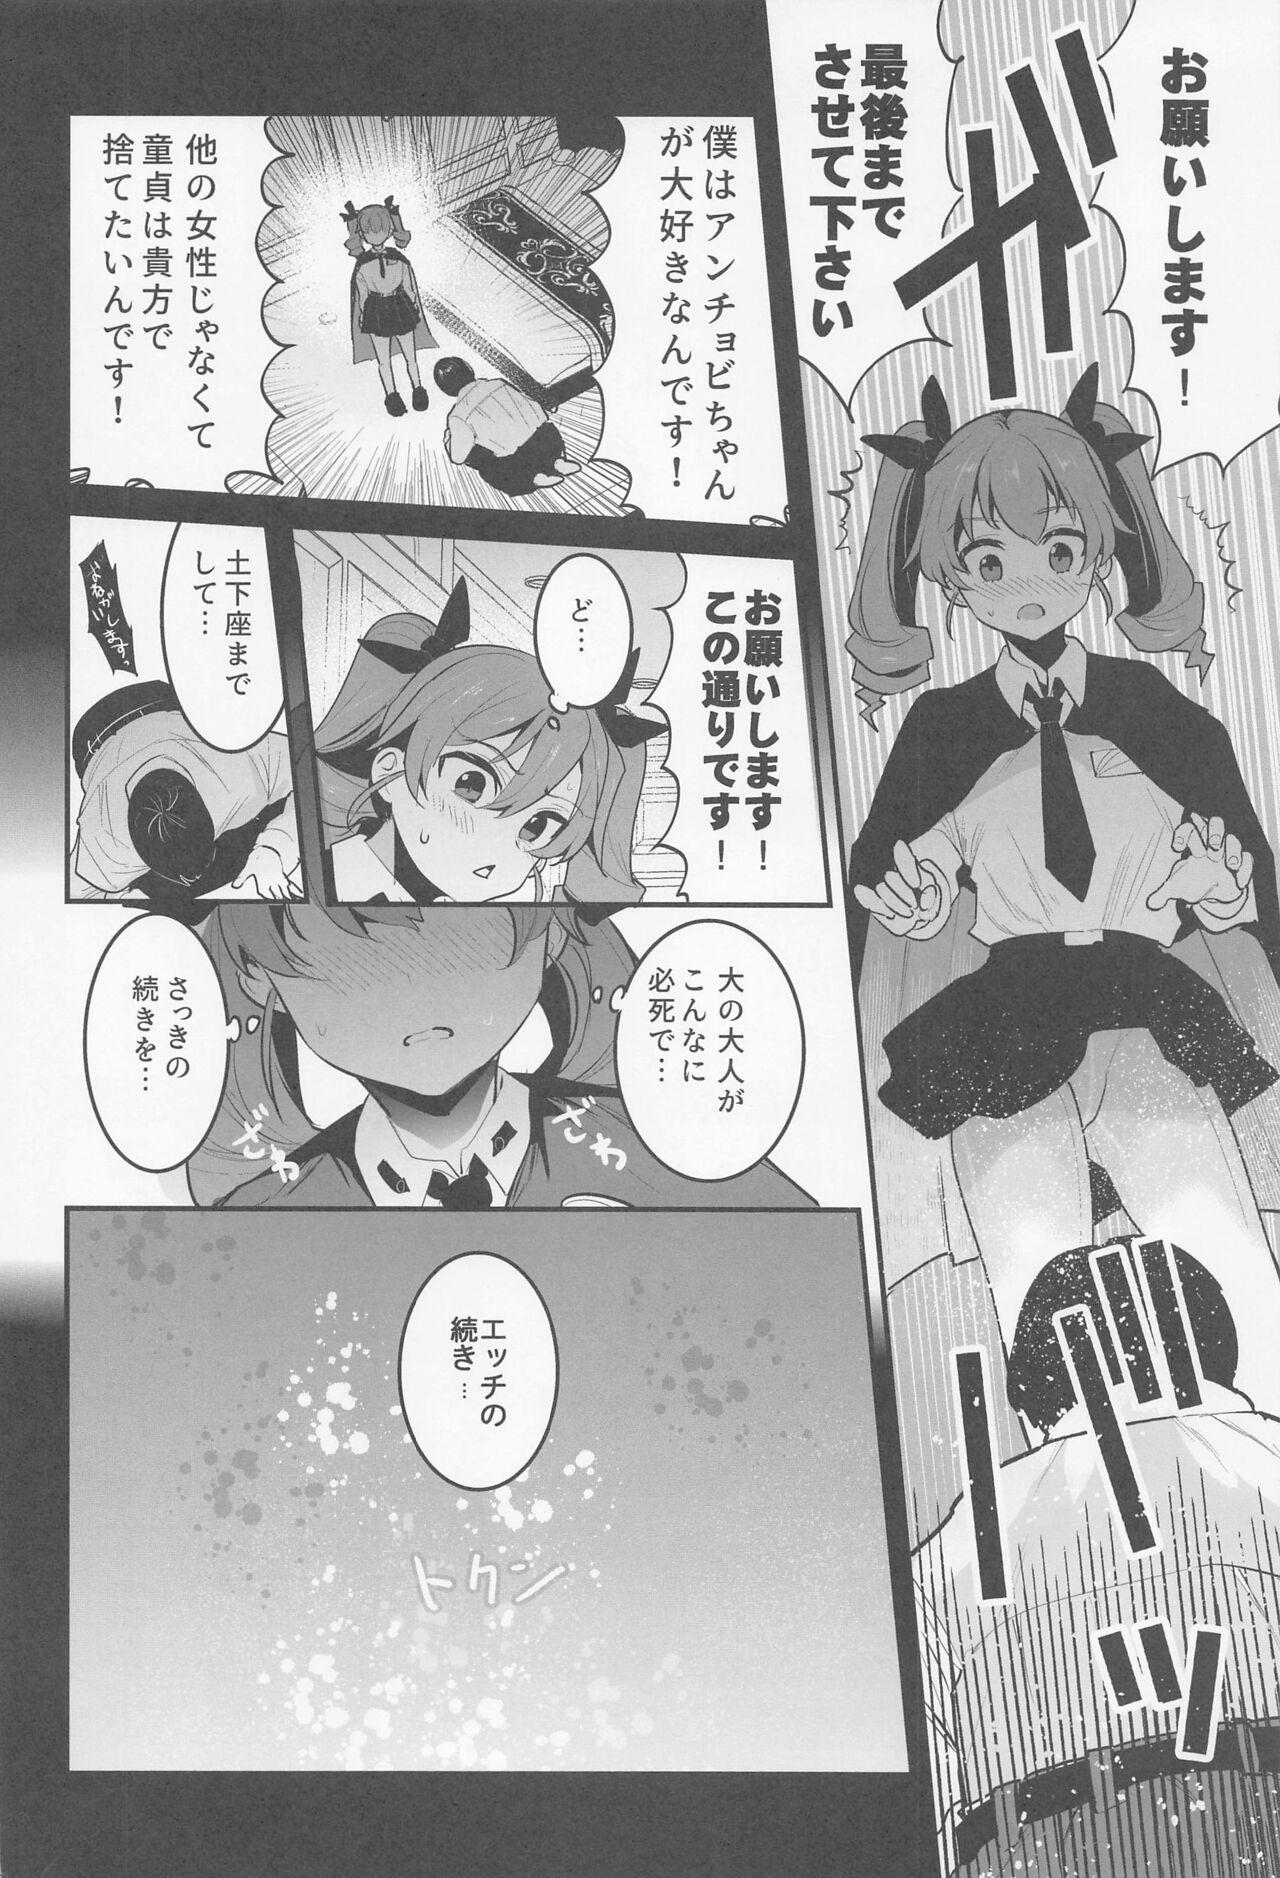 Bisex anchobi dogezadeonegaishitaraippatsuyarasetekuremashita - Girls und panzer Strapon - Page 11